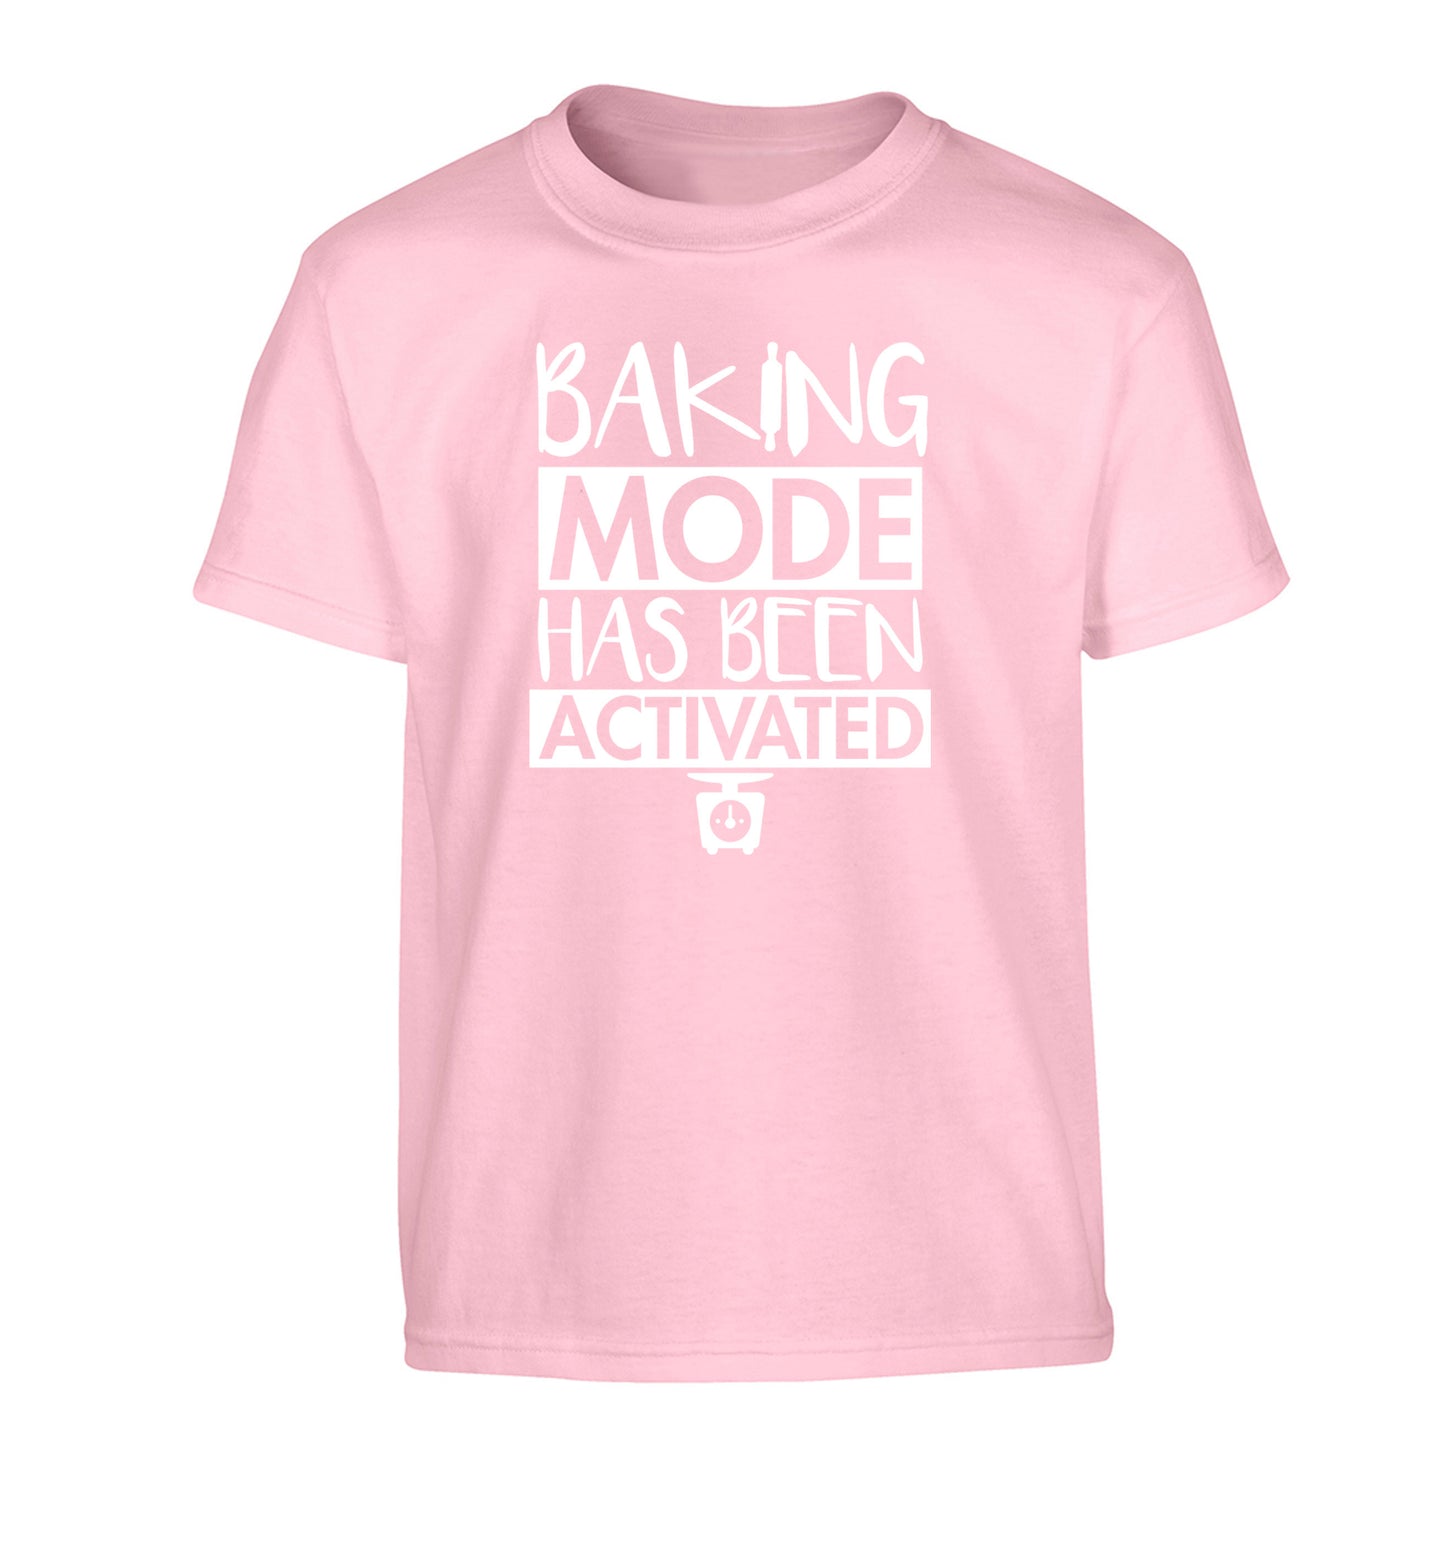 Baking mode has been activated Children's light pink Tshirt 12-14 Years